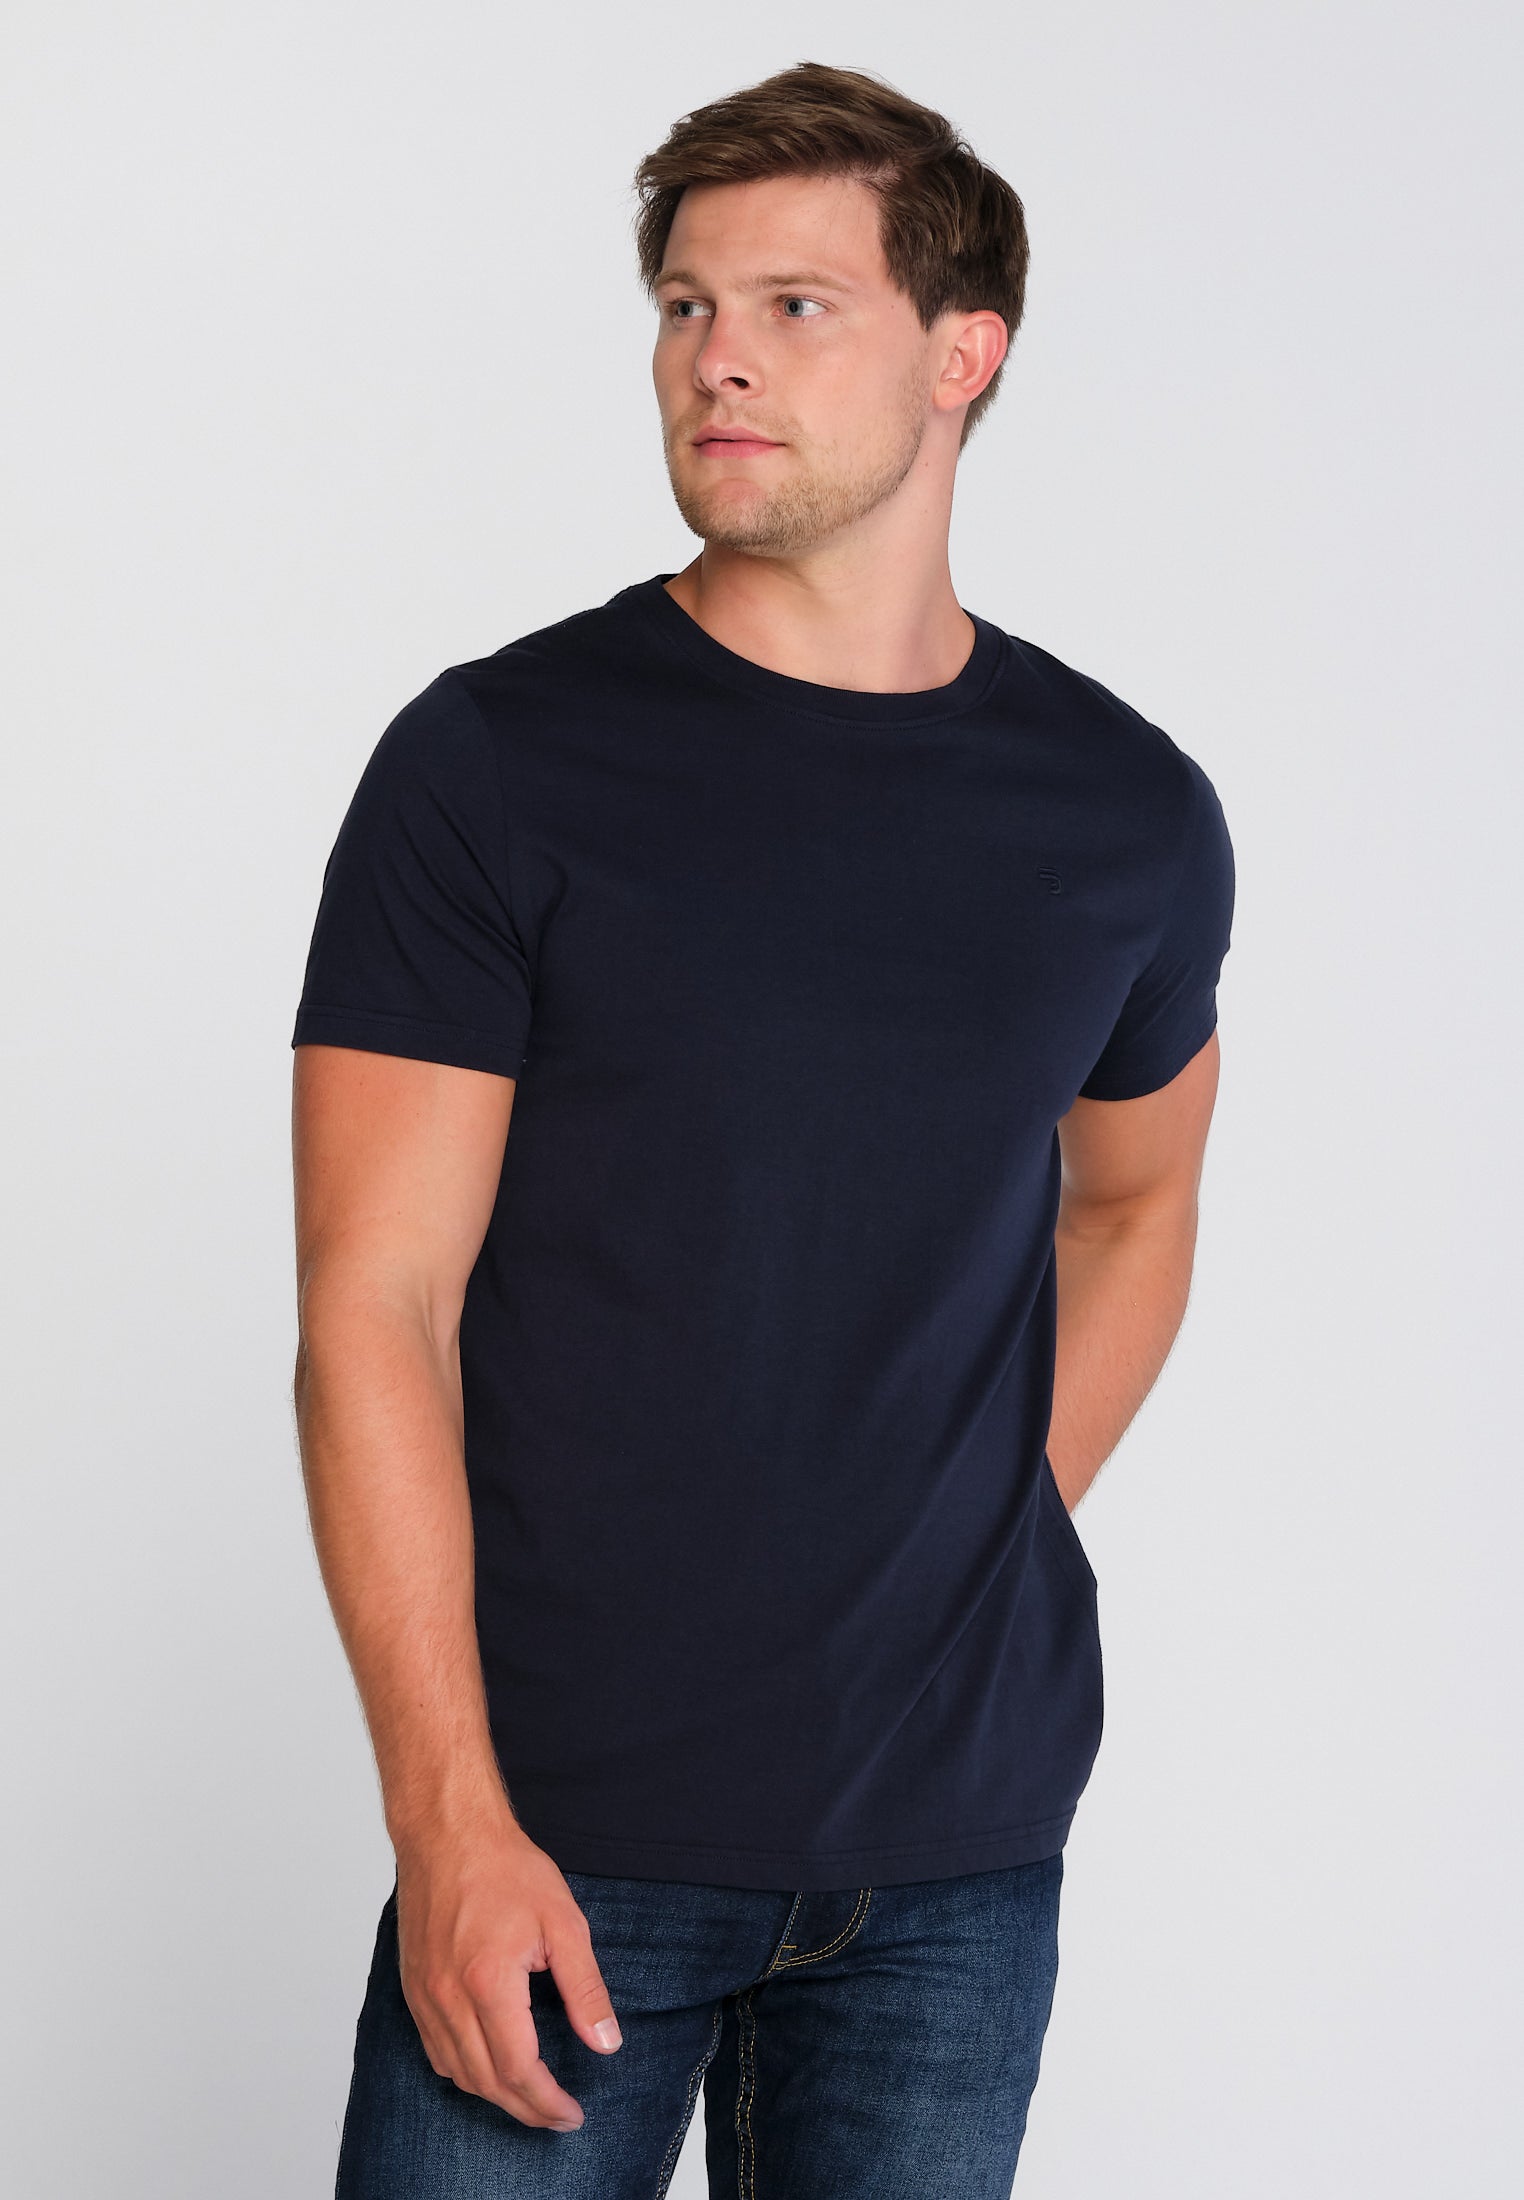 T-Shirt Homme Essentials 02 Navy Carbon | J&JOY.